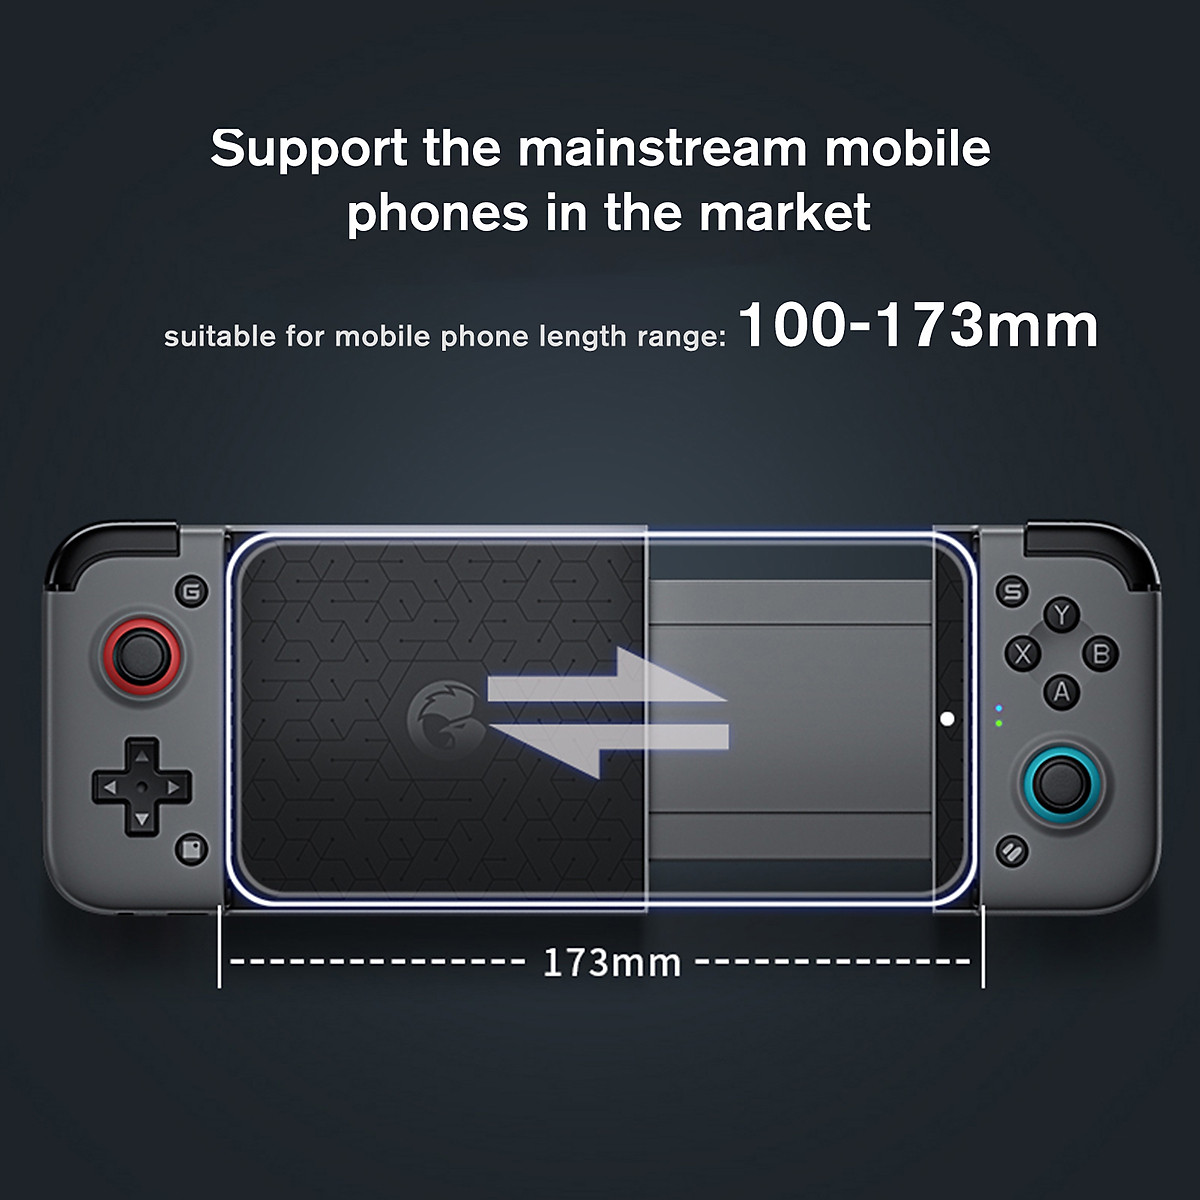 Tay Cầm Không Dây GameSir X2 BT Game Controller Wireless Mobile Game Gamepad Joystick Stretchable for Android iOS Phone Support Cloud –Hàng Chính Hãng